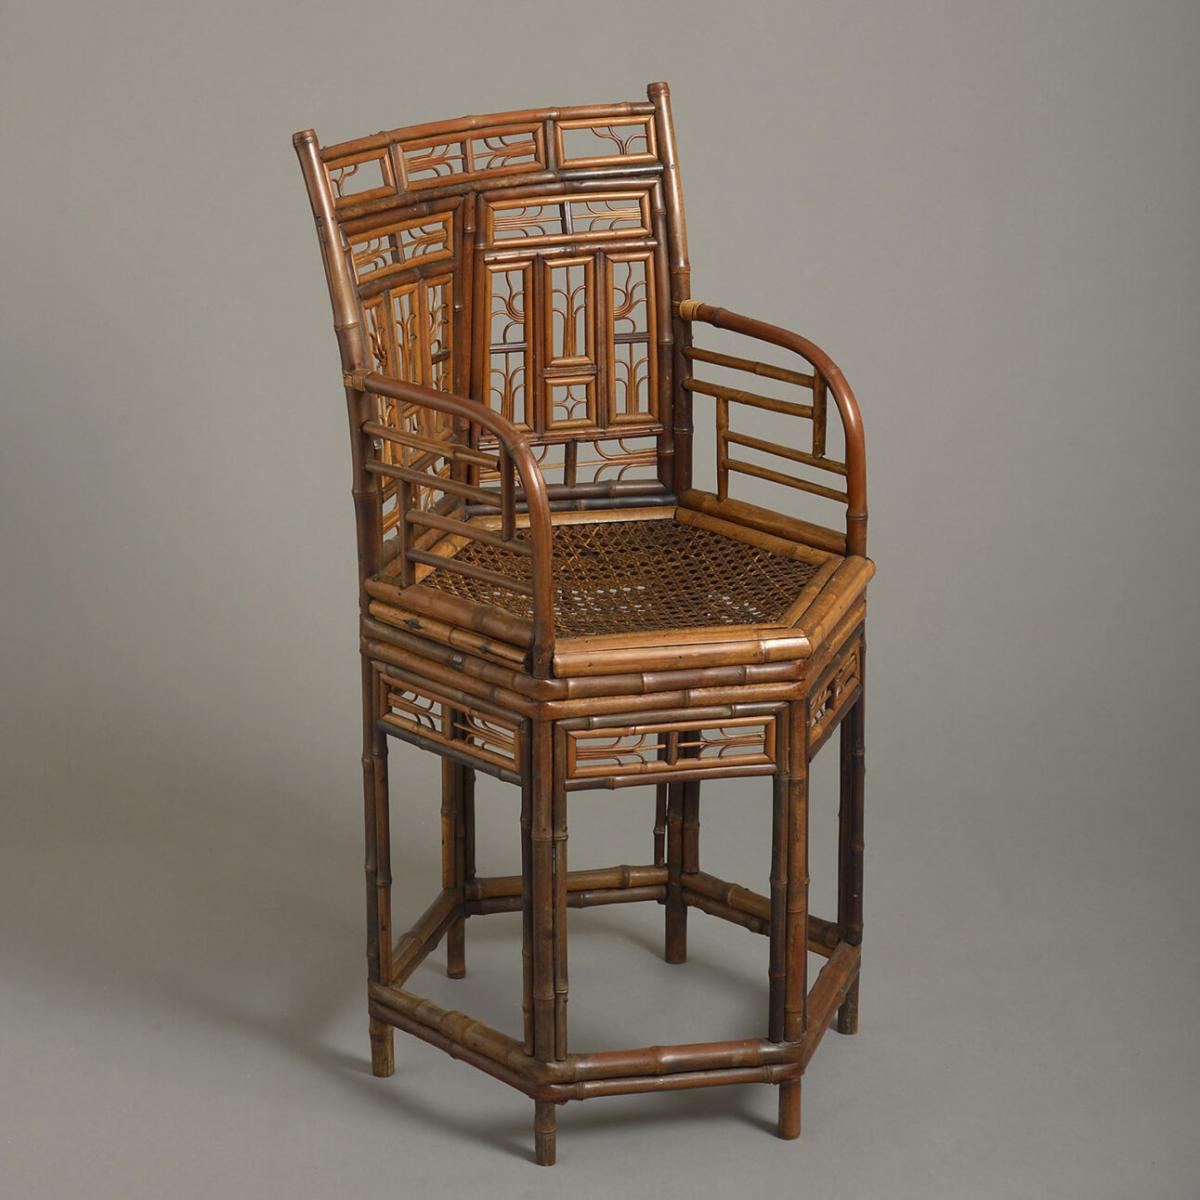 Brighton Pavilion chair, Chinese, Qing dynasty circa 1800